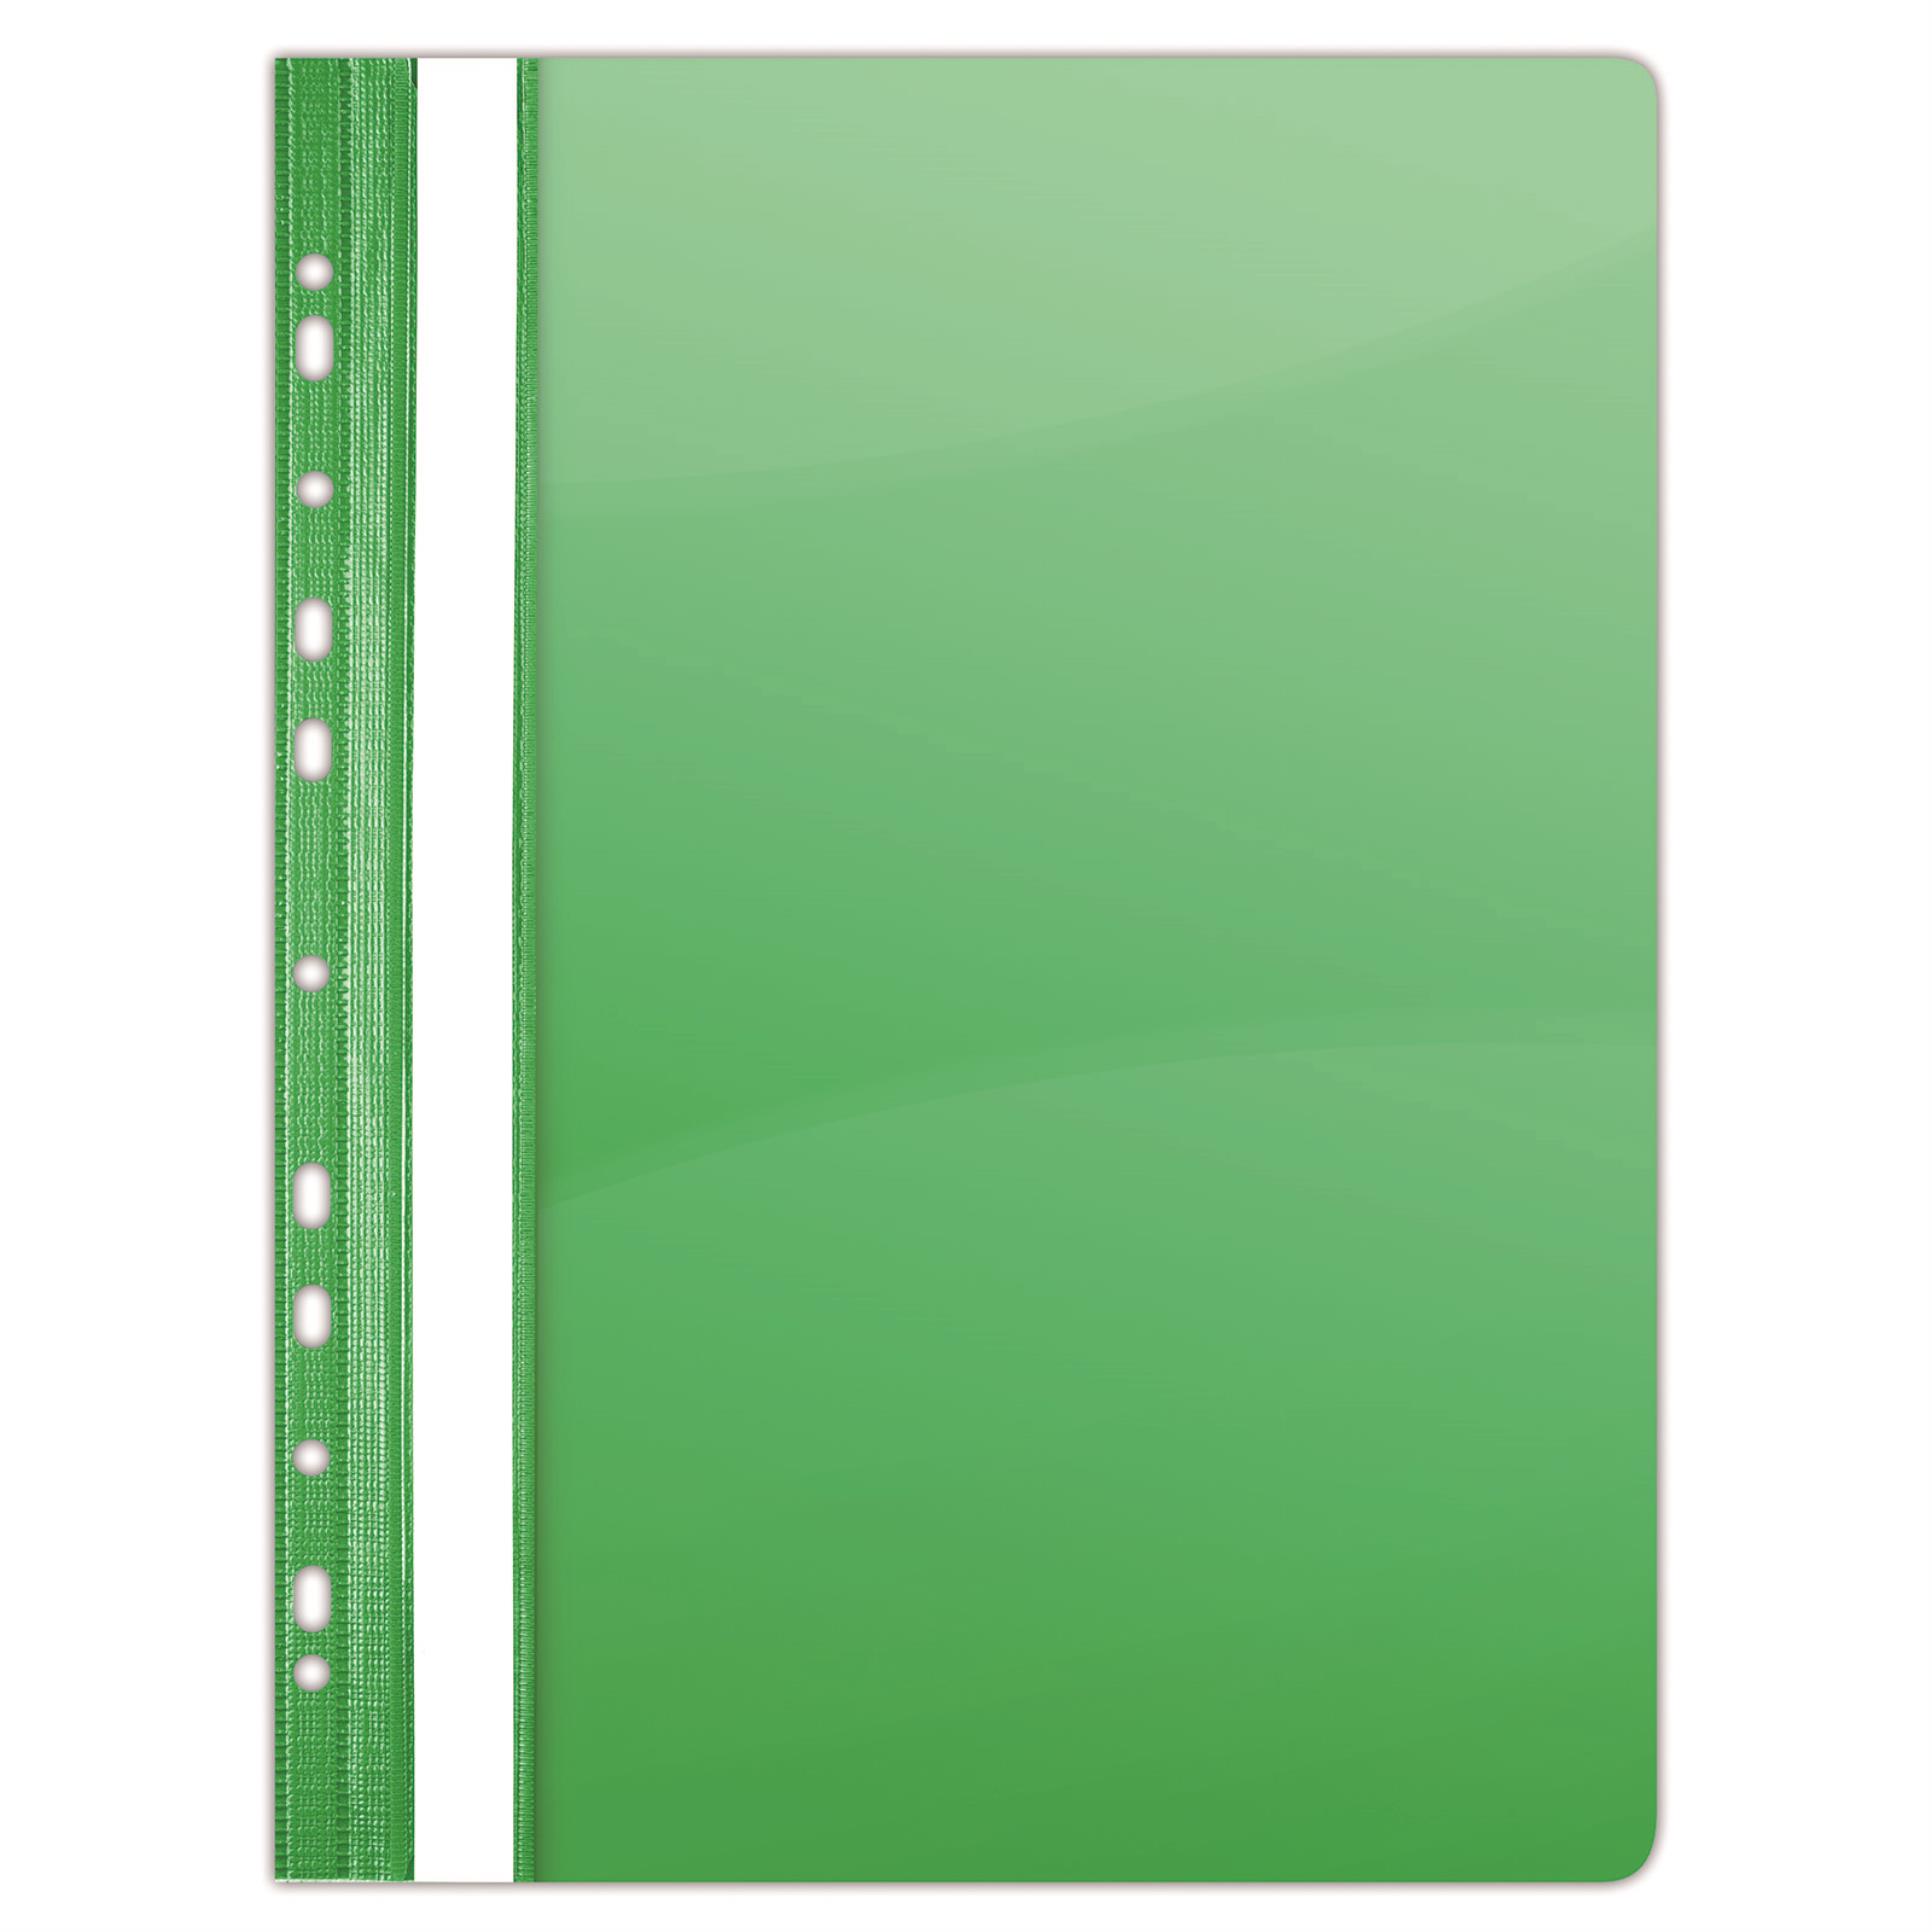 Závěsný plastový rychlovazač Donau - A4, PVC, zelený, 1 ks